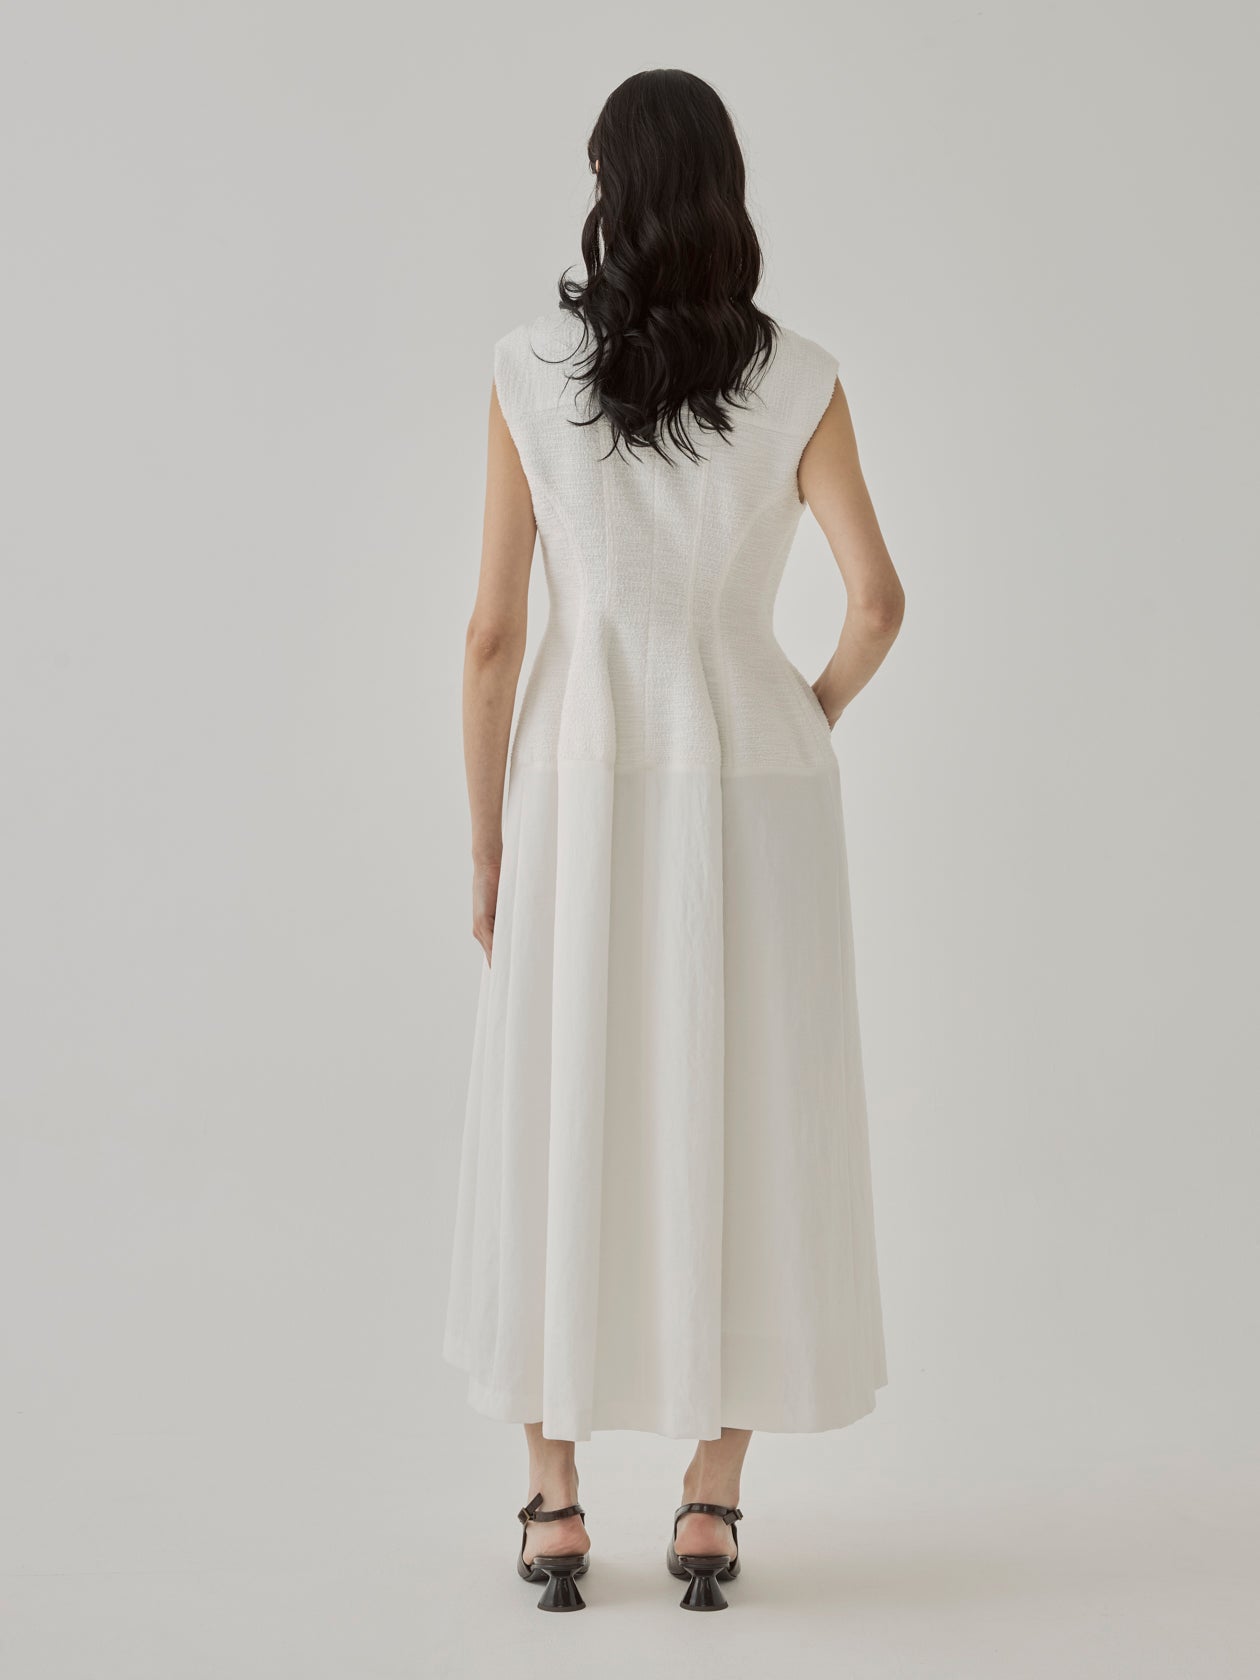 Ilsa sleeveless dress BK | AKIRANAKA ONLINESTORE